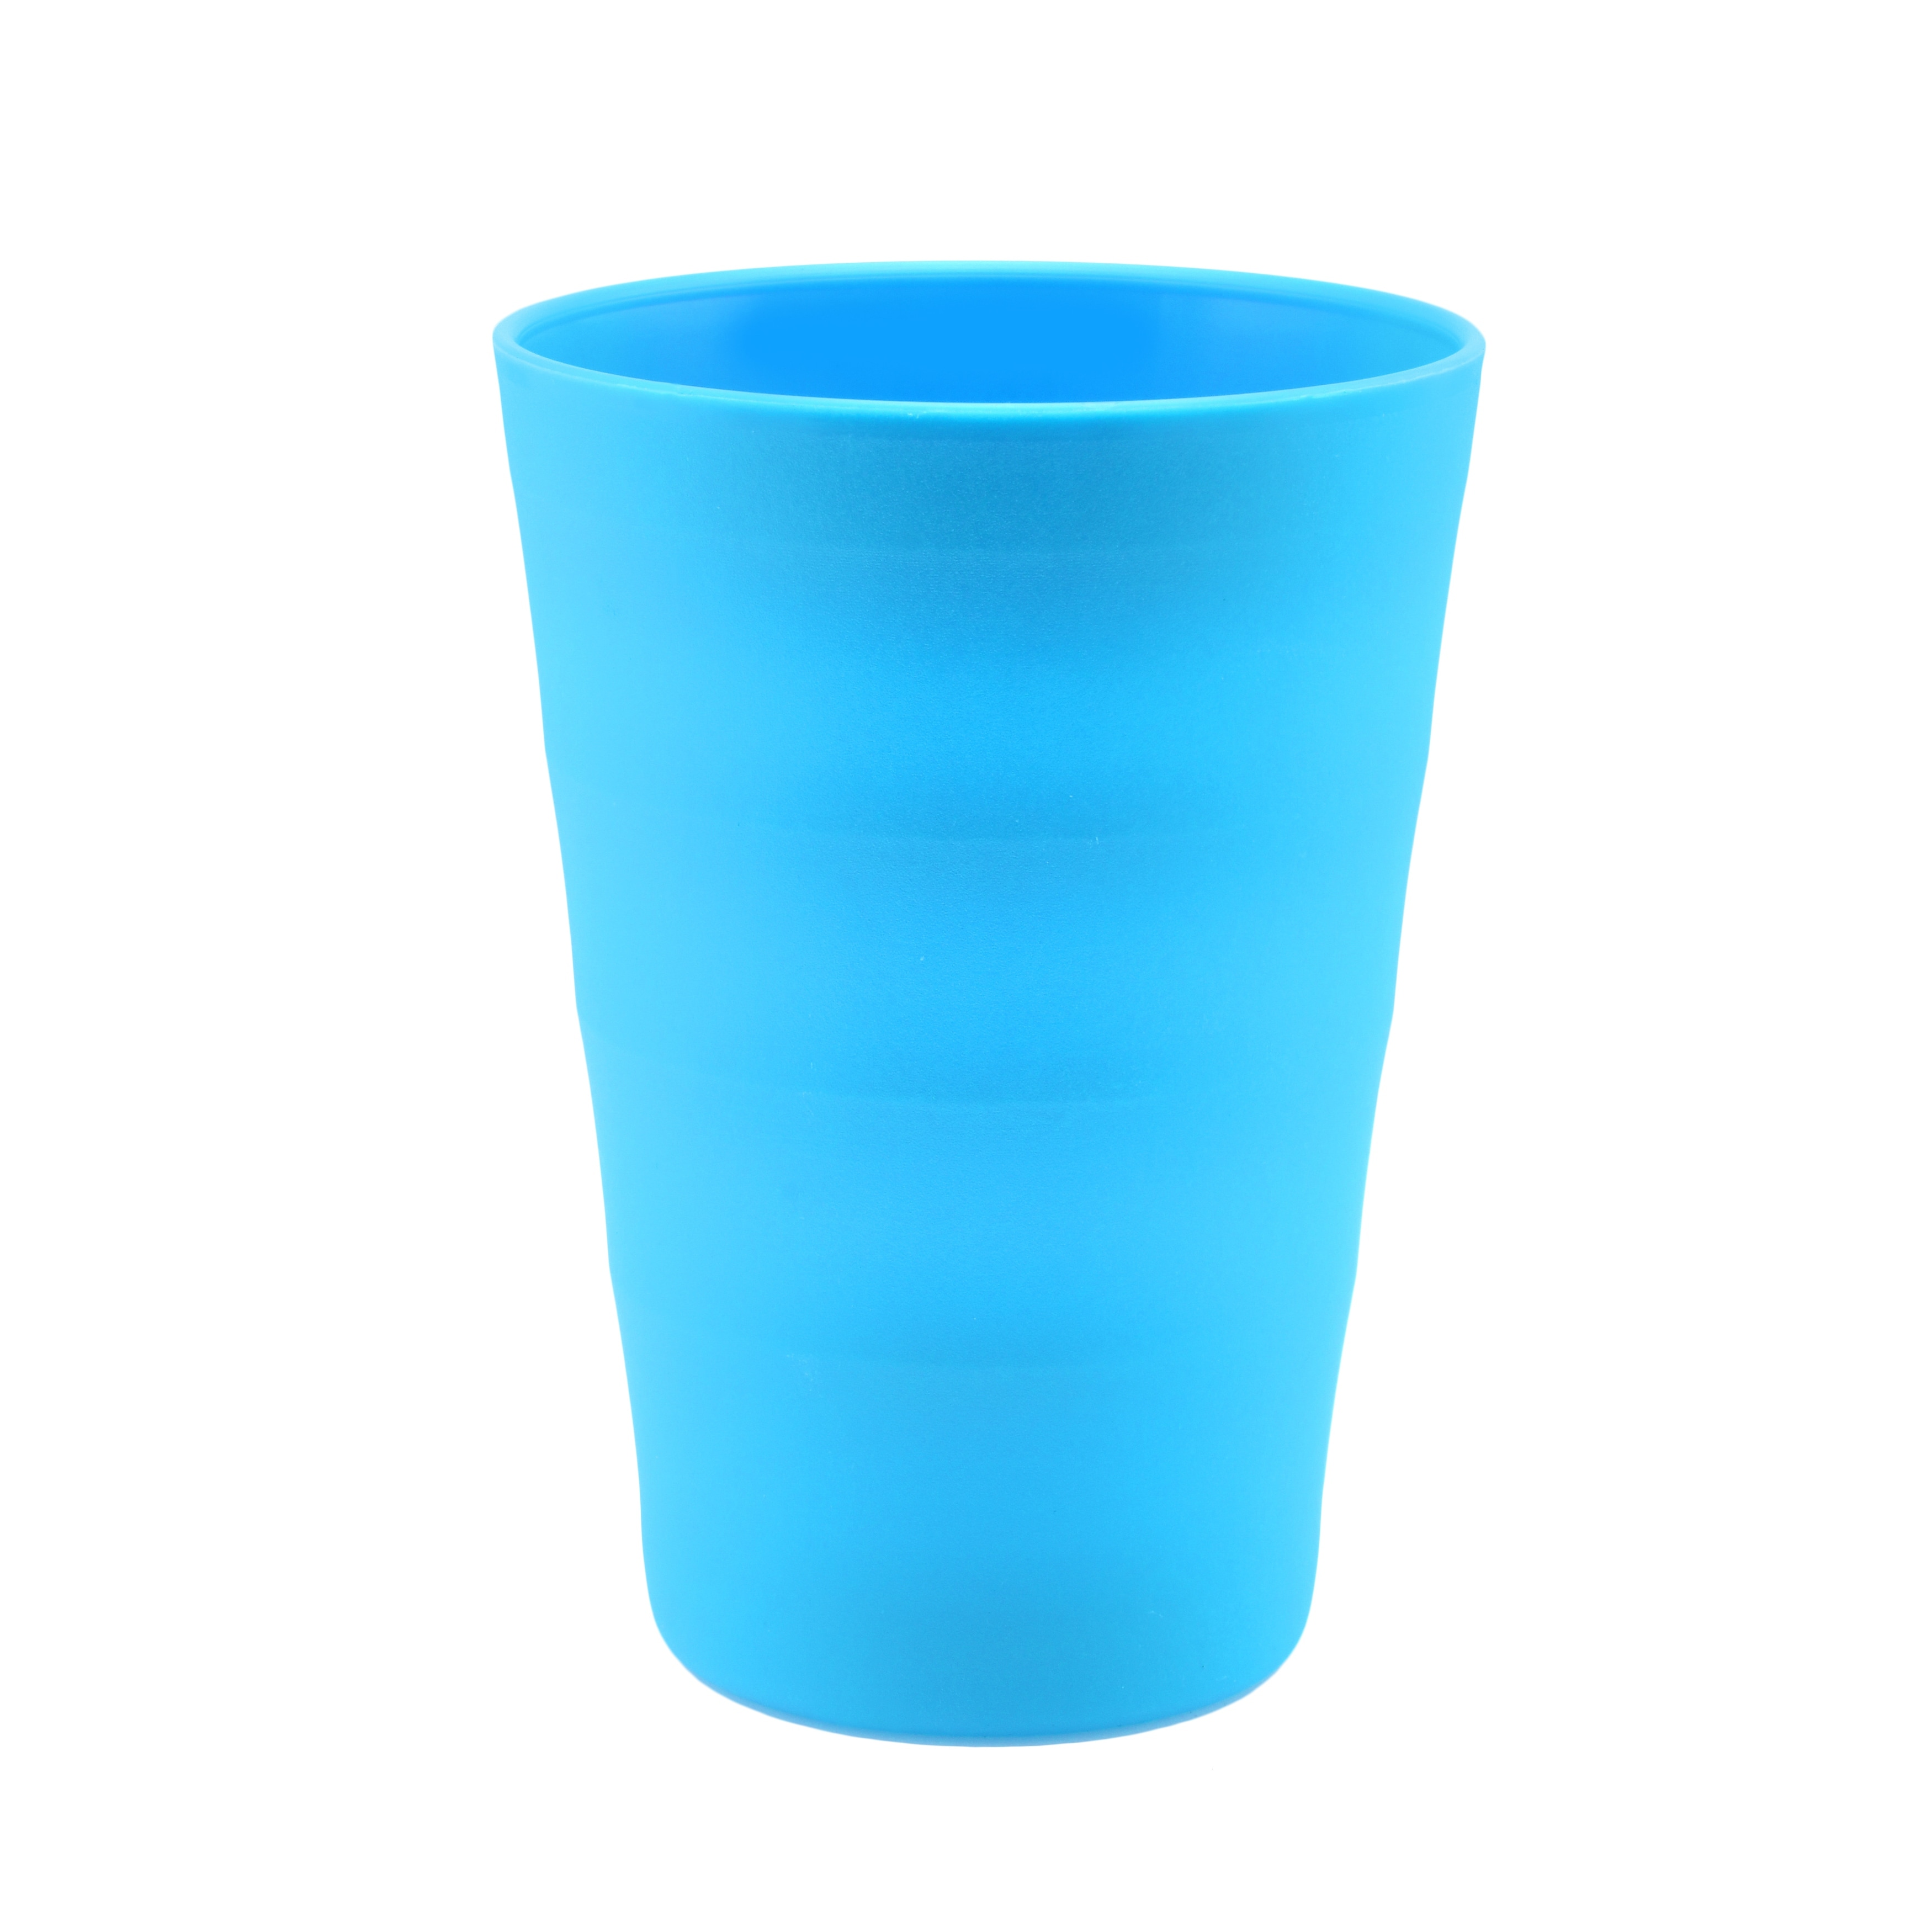 https://ak1.ostkcdn.com/images/products/is/images/direct/a27edf62d200450ba88b31e0db849bca353797e4/Break-Resistant-Plastic-Cups-12oz%2C-Reusable-Design.jpg